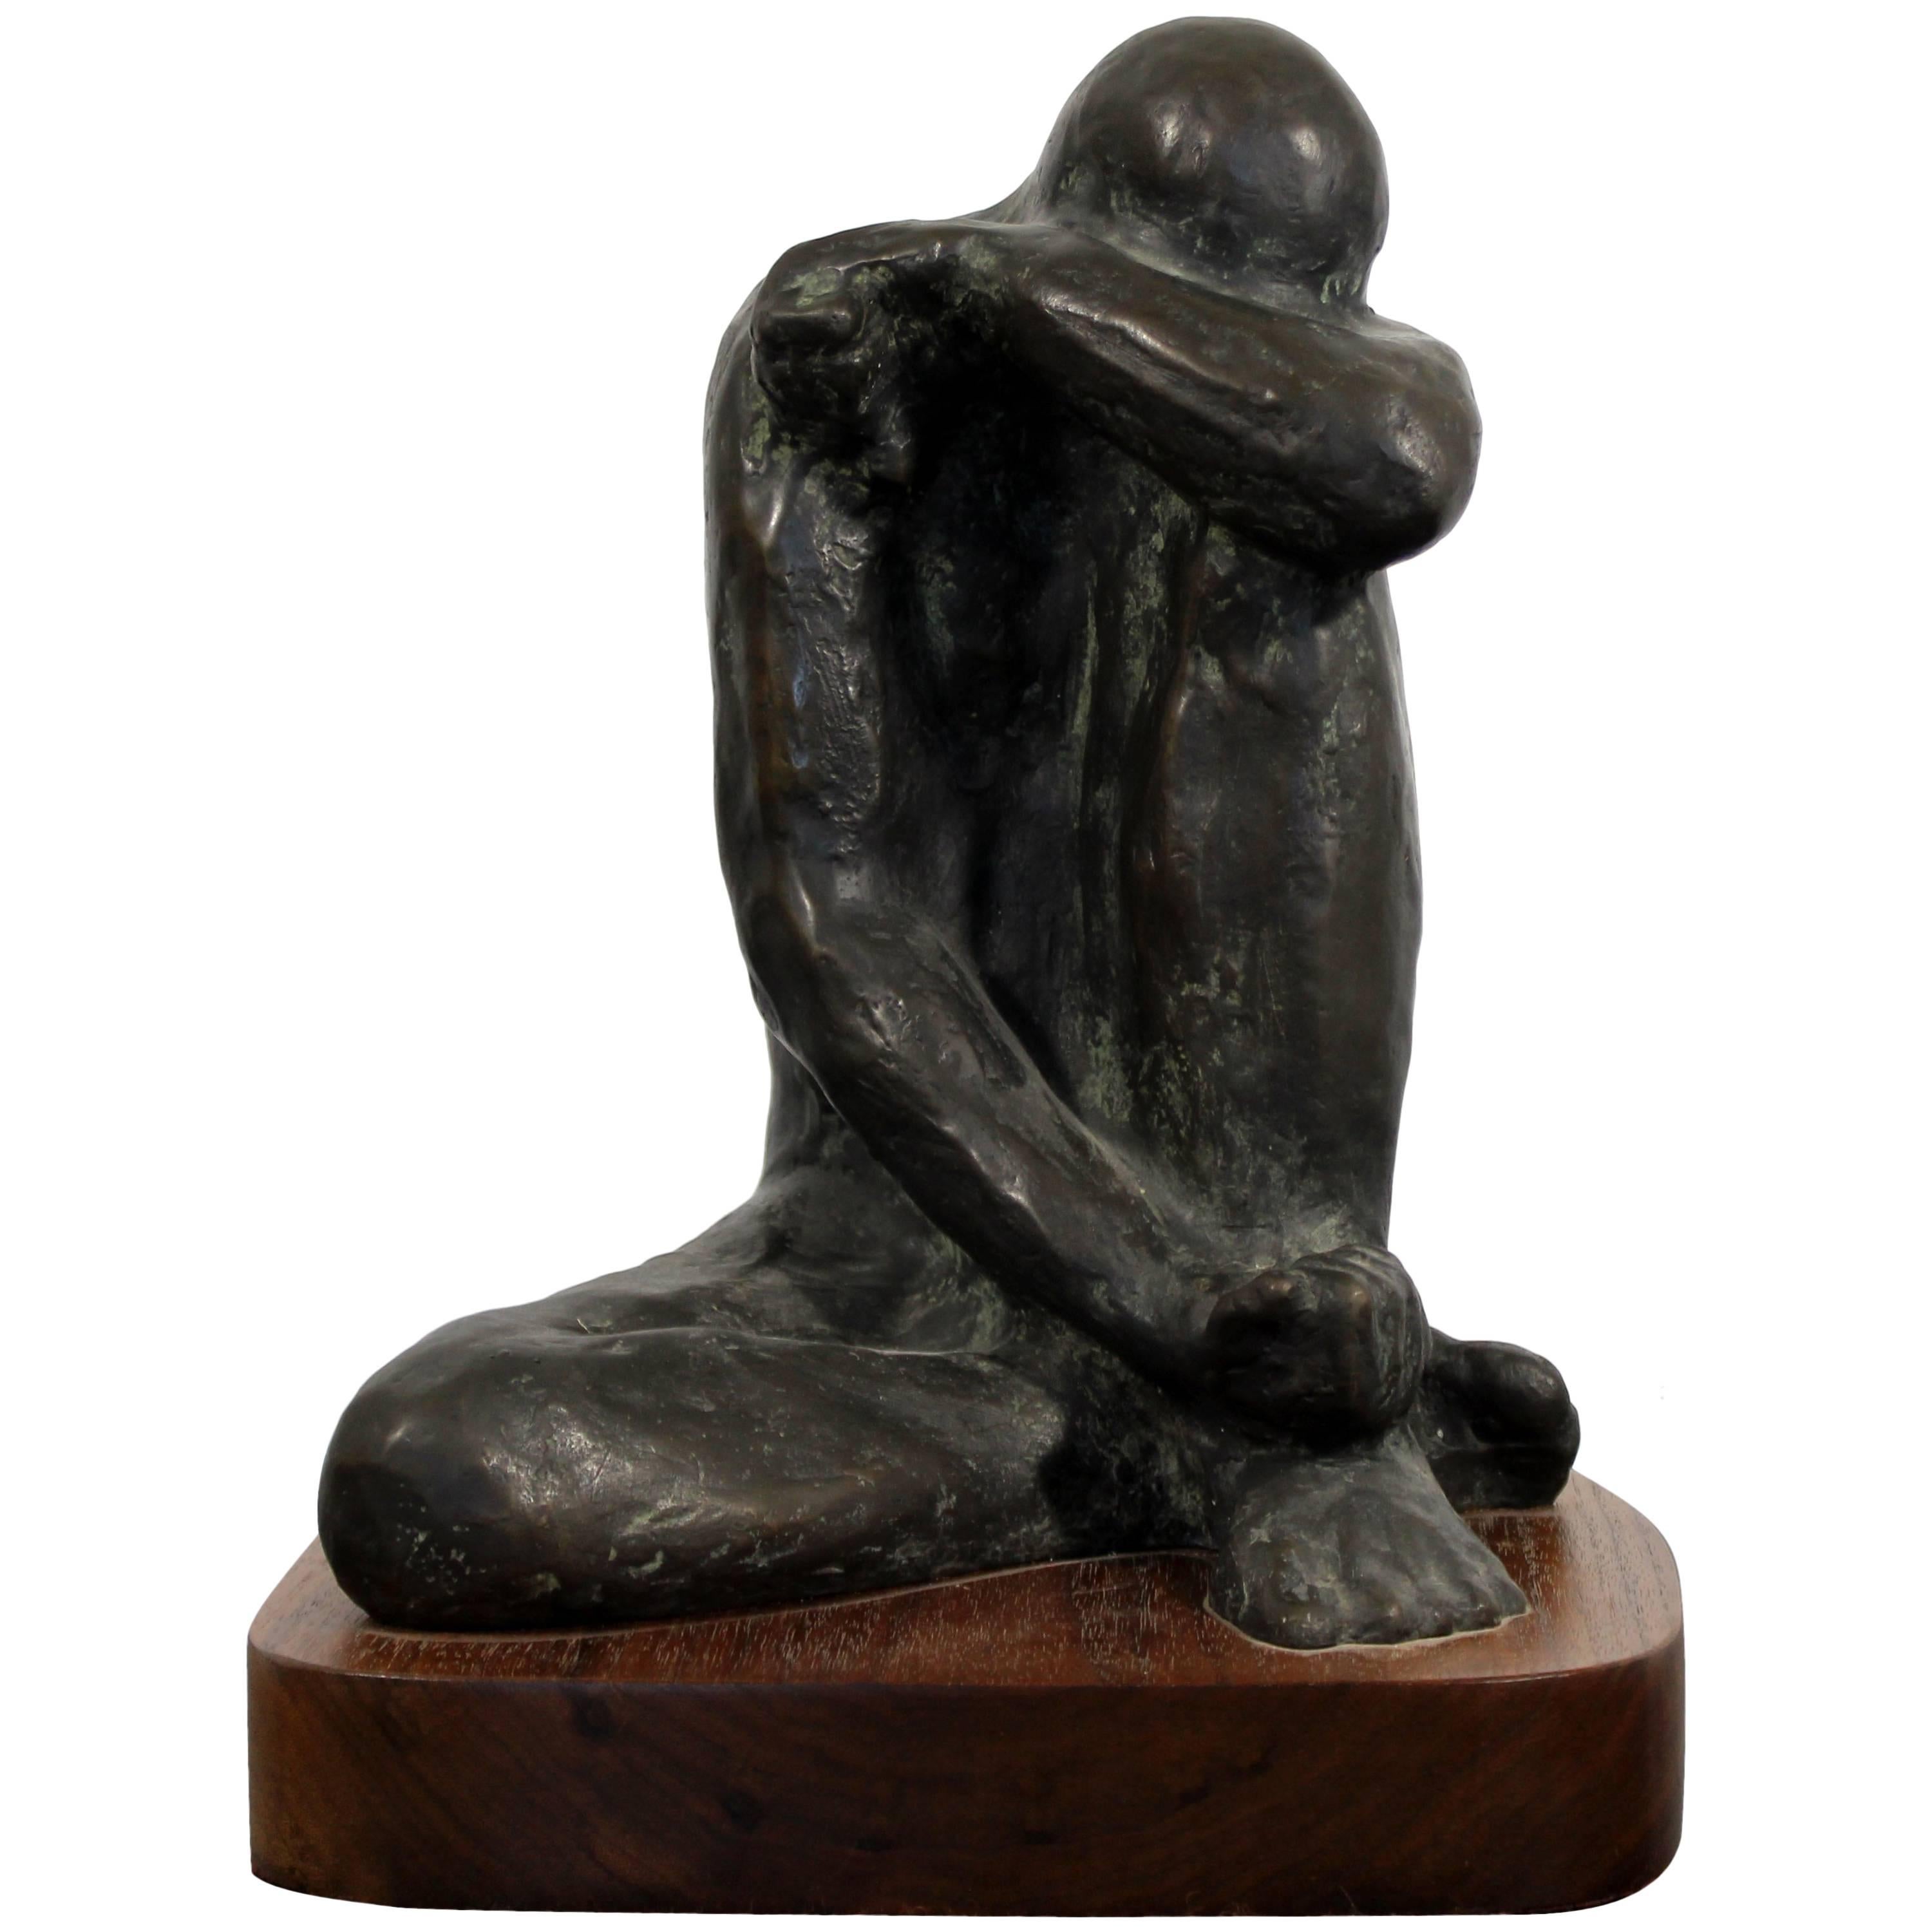 Despair Bronze Figurative Table Sculpture by Charles Masse 3/12, 1989